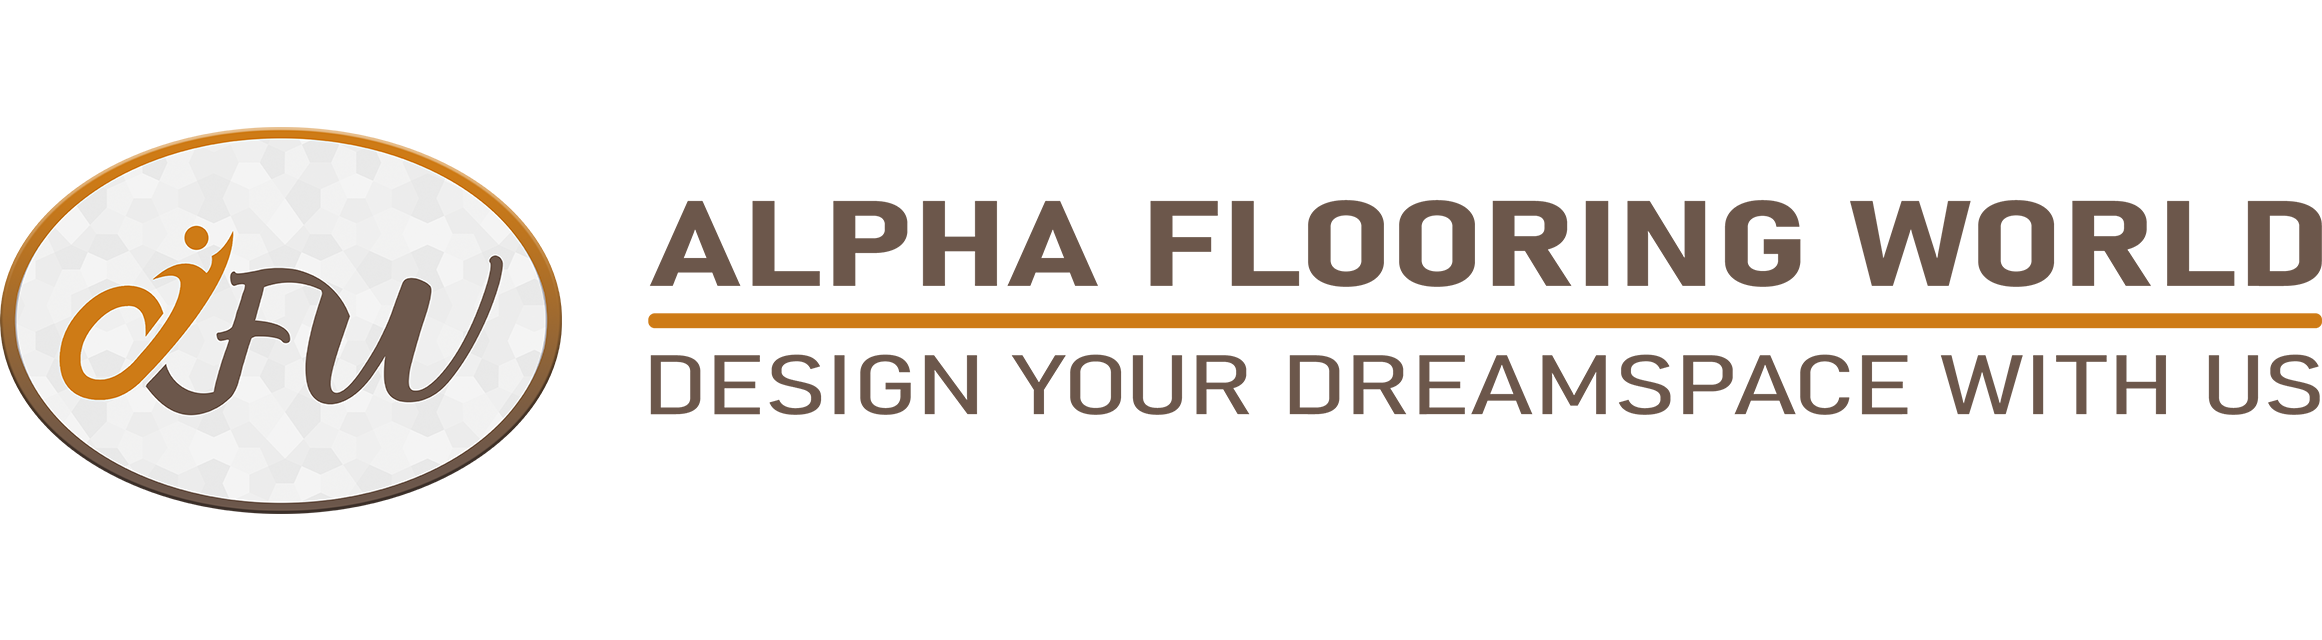 Alpha Flooring World